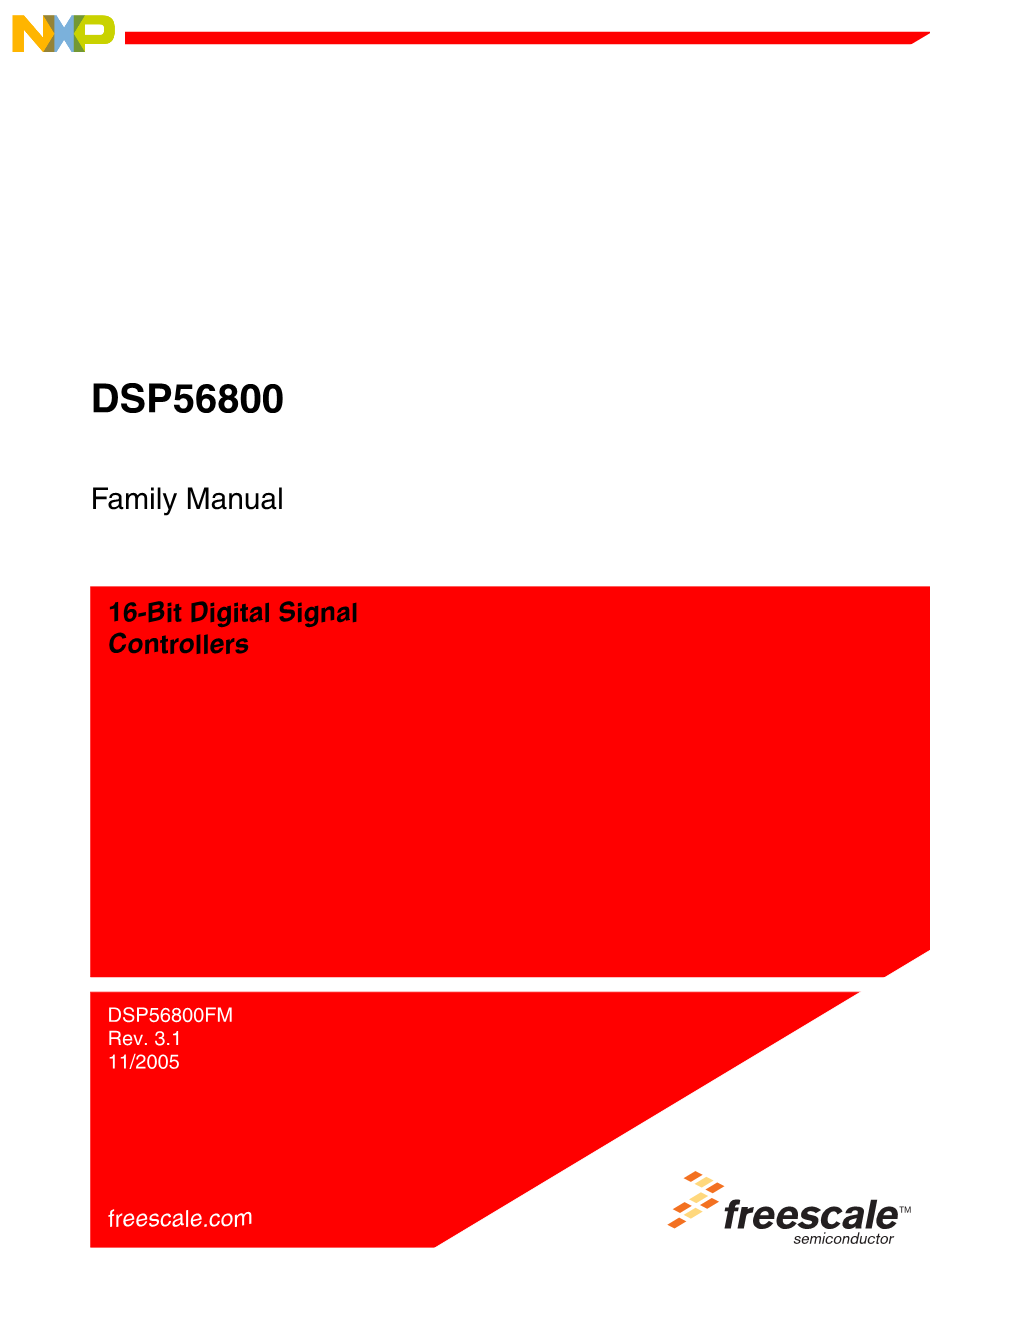 DSP56800 16-Bit Digital Signal Processor Family Manual